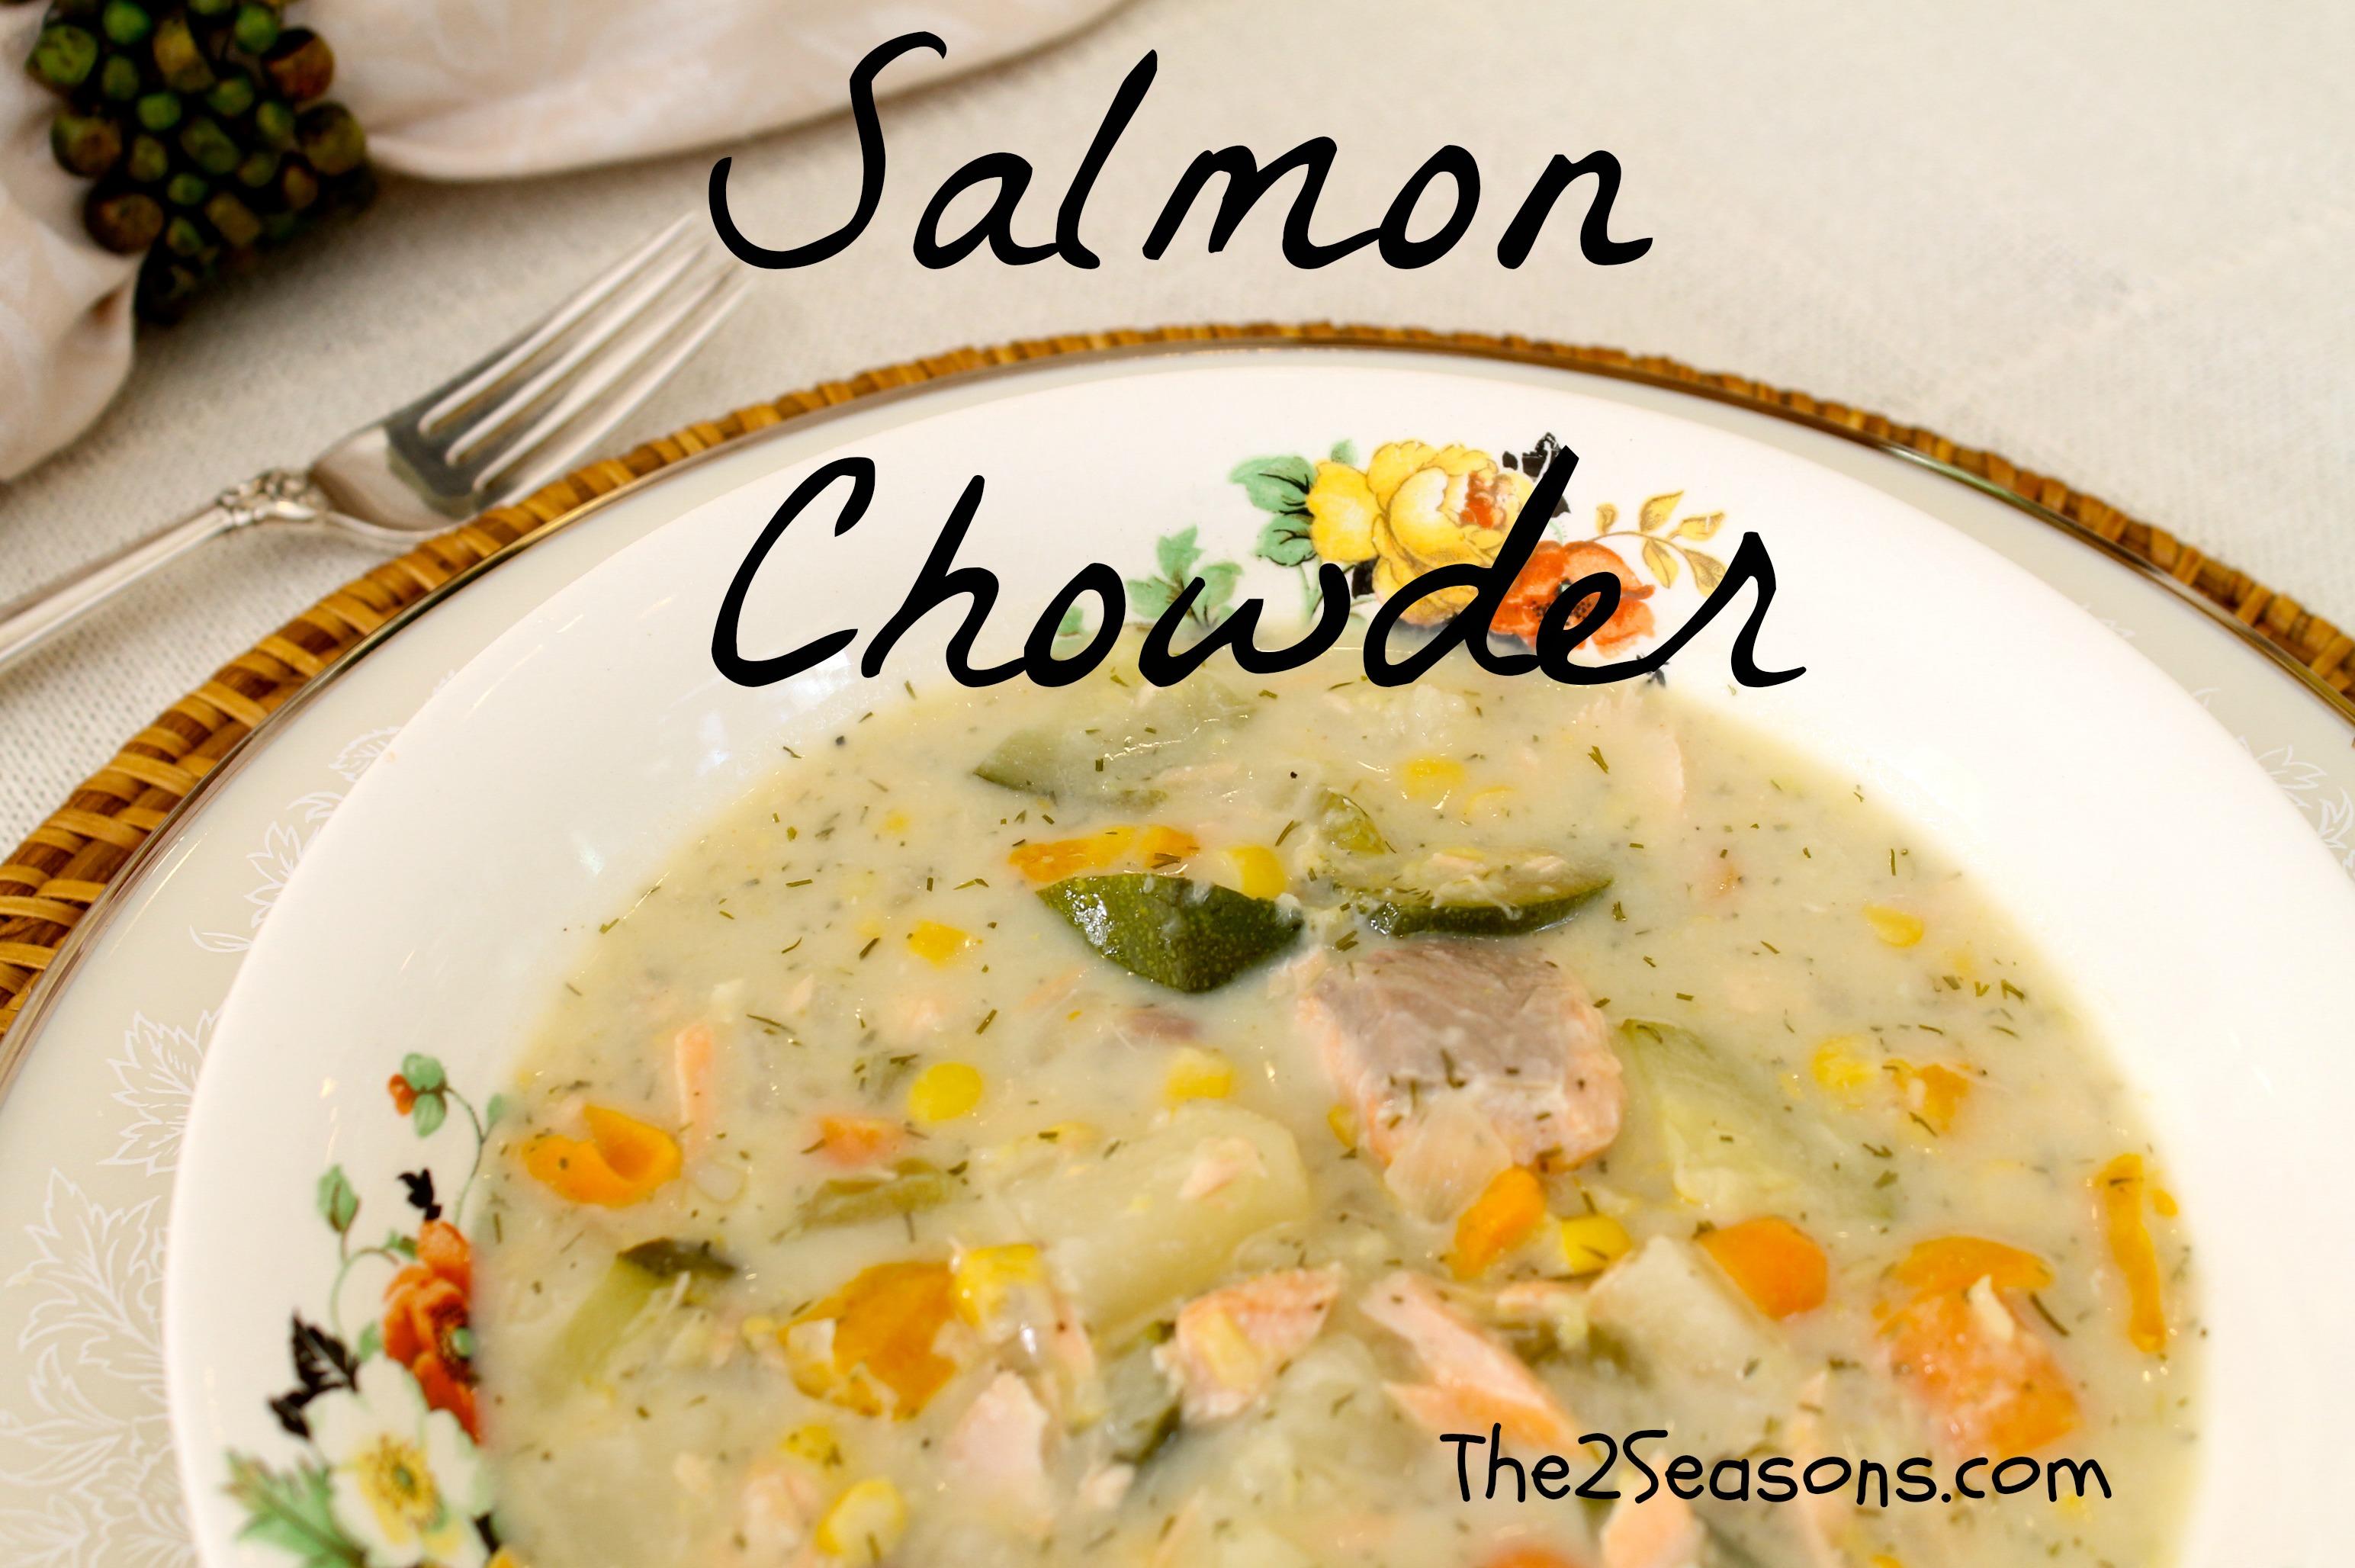 Salmon Chowder - Potato Corn Chowder